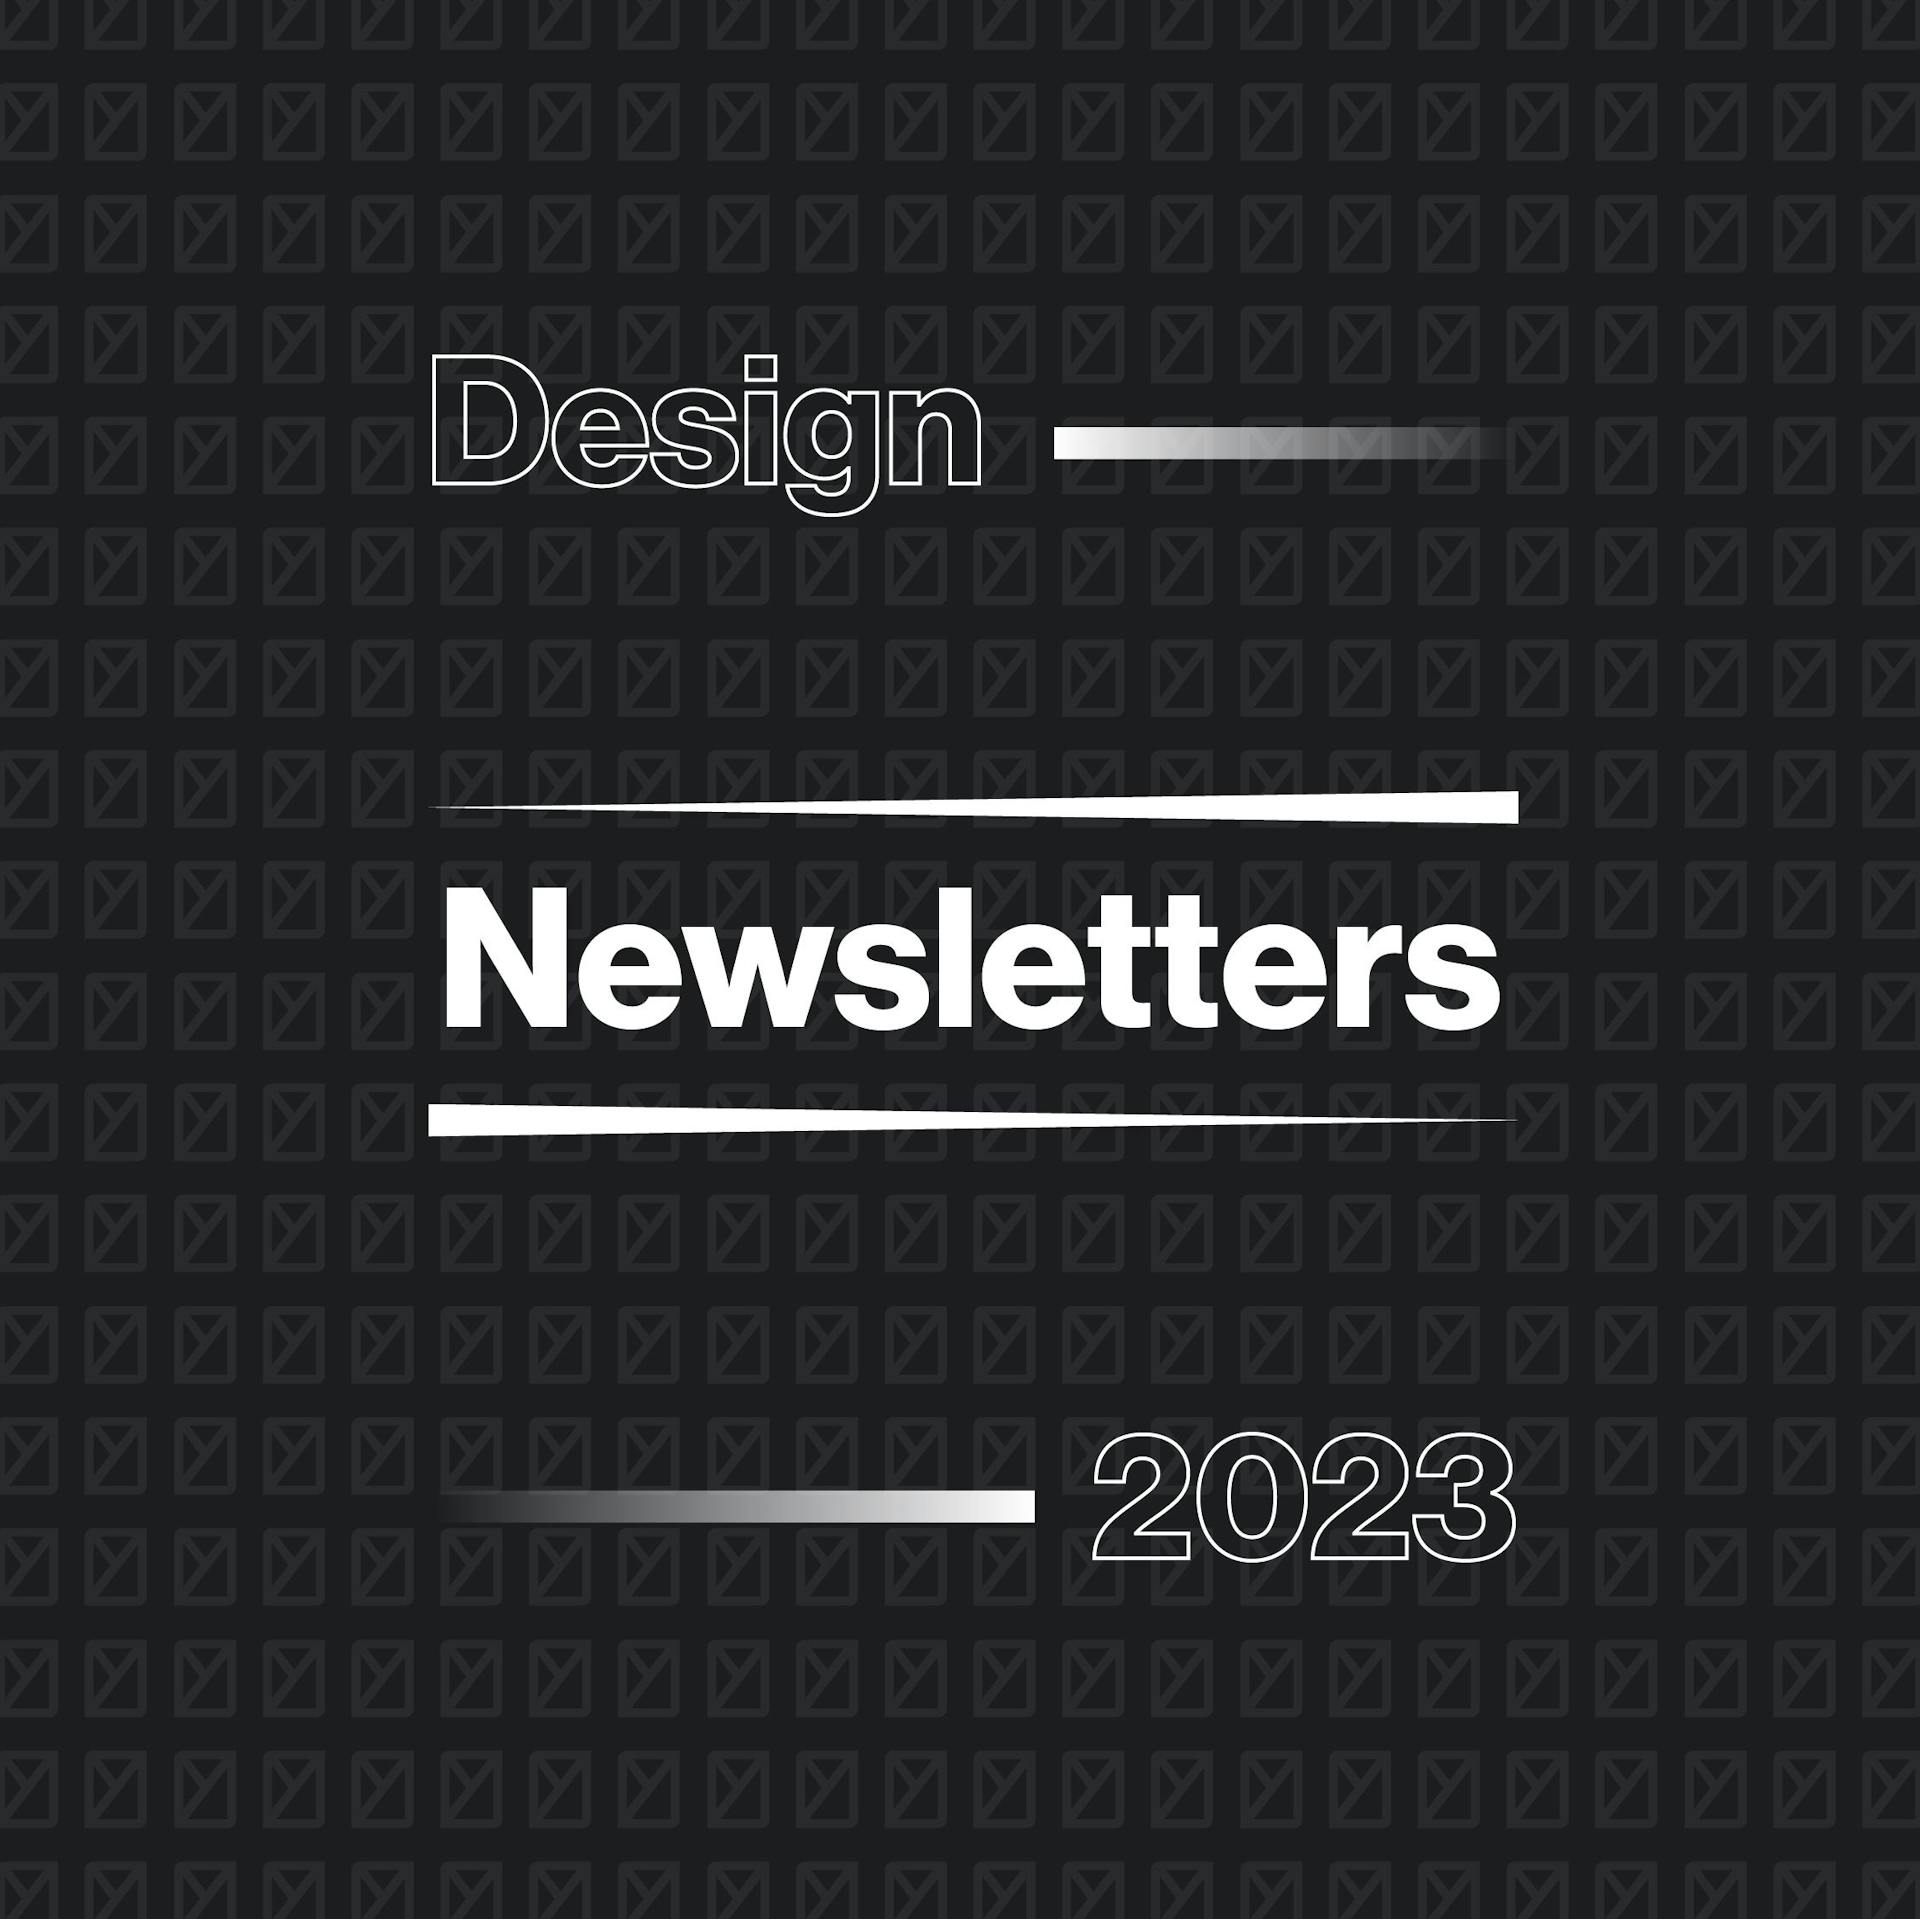 Newsletter Design - Email Direct Marketing in 2023